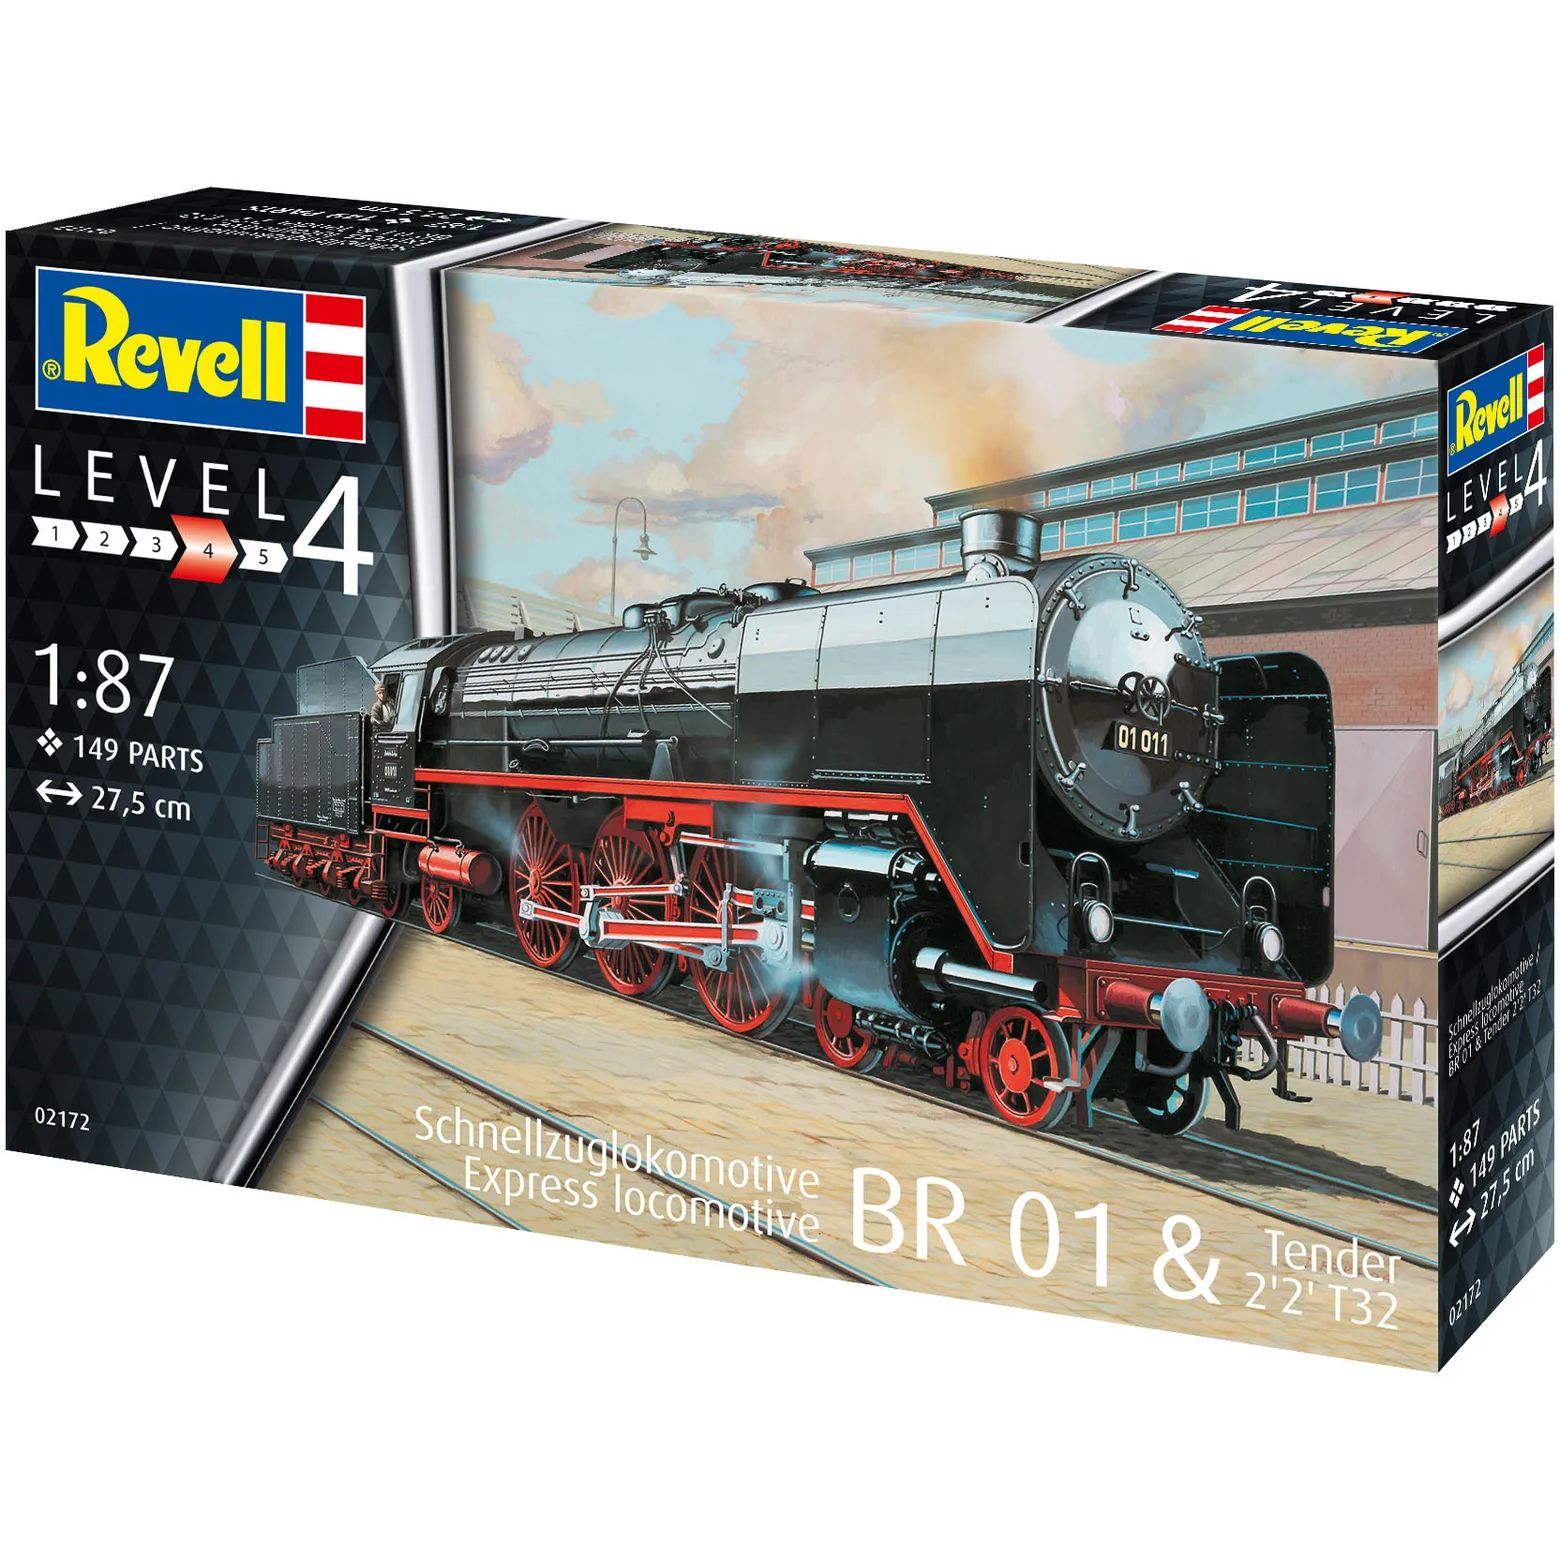 Сборная модель Revell Экспресс локомотив BR01 с тендером 2'2 T32 масштаб 1:87, 149 деталей (RVL-02172) - фото 1